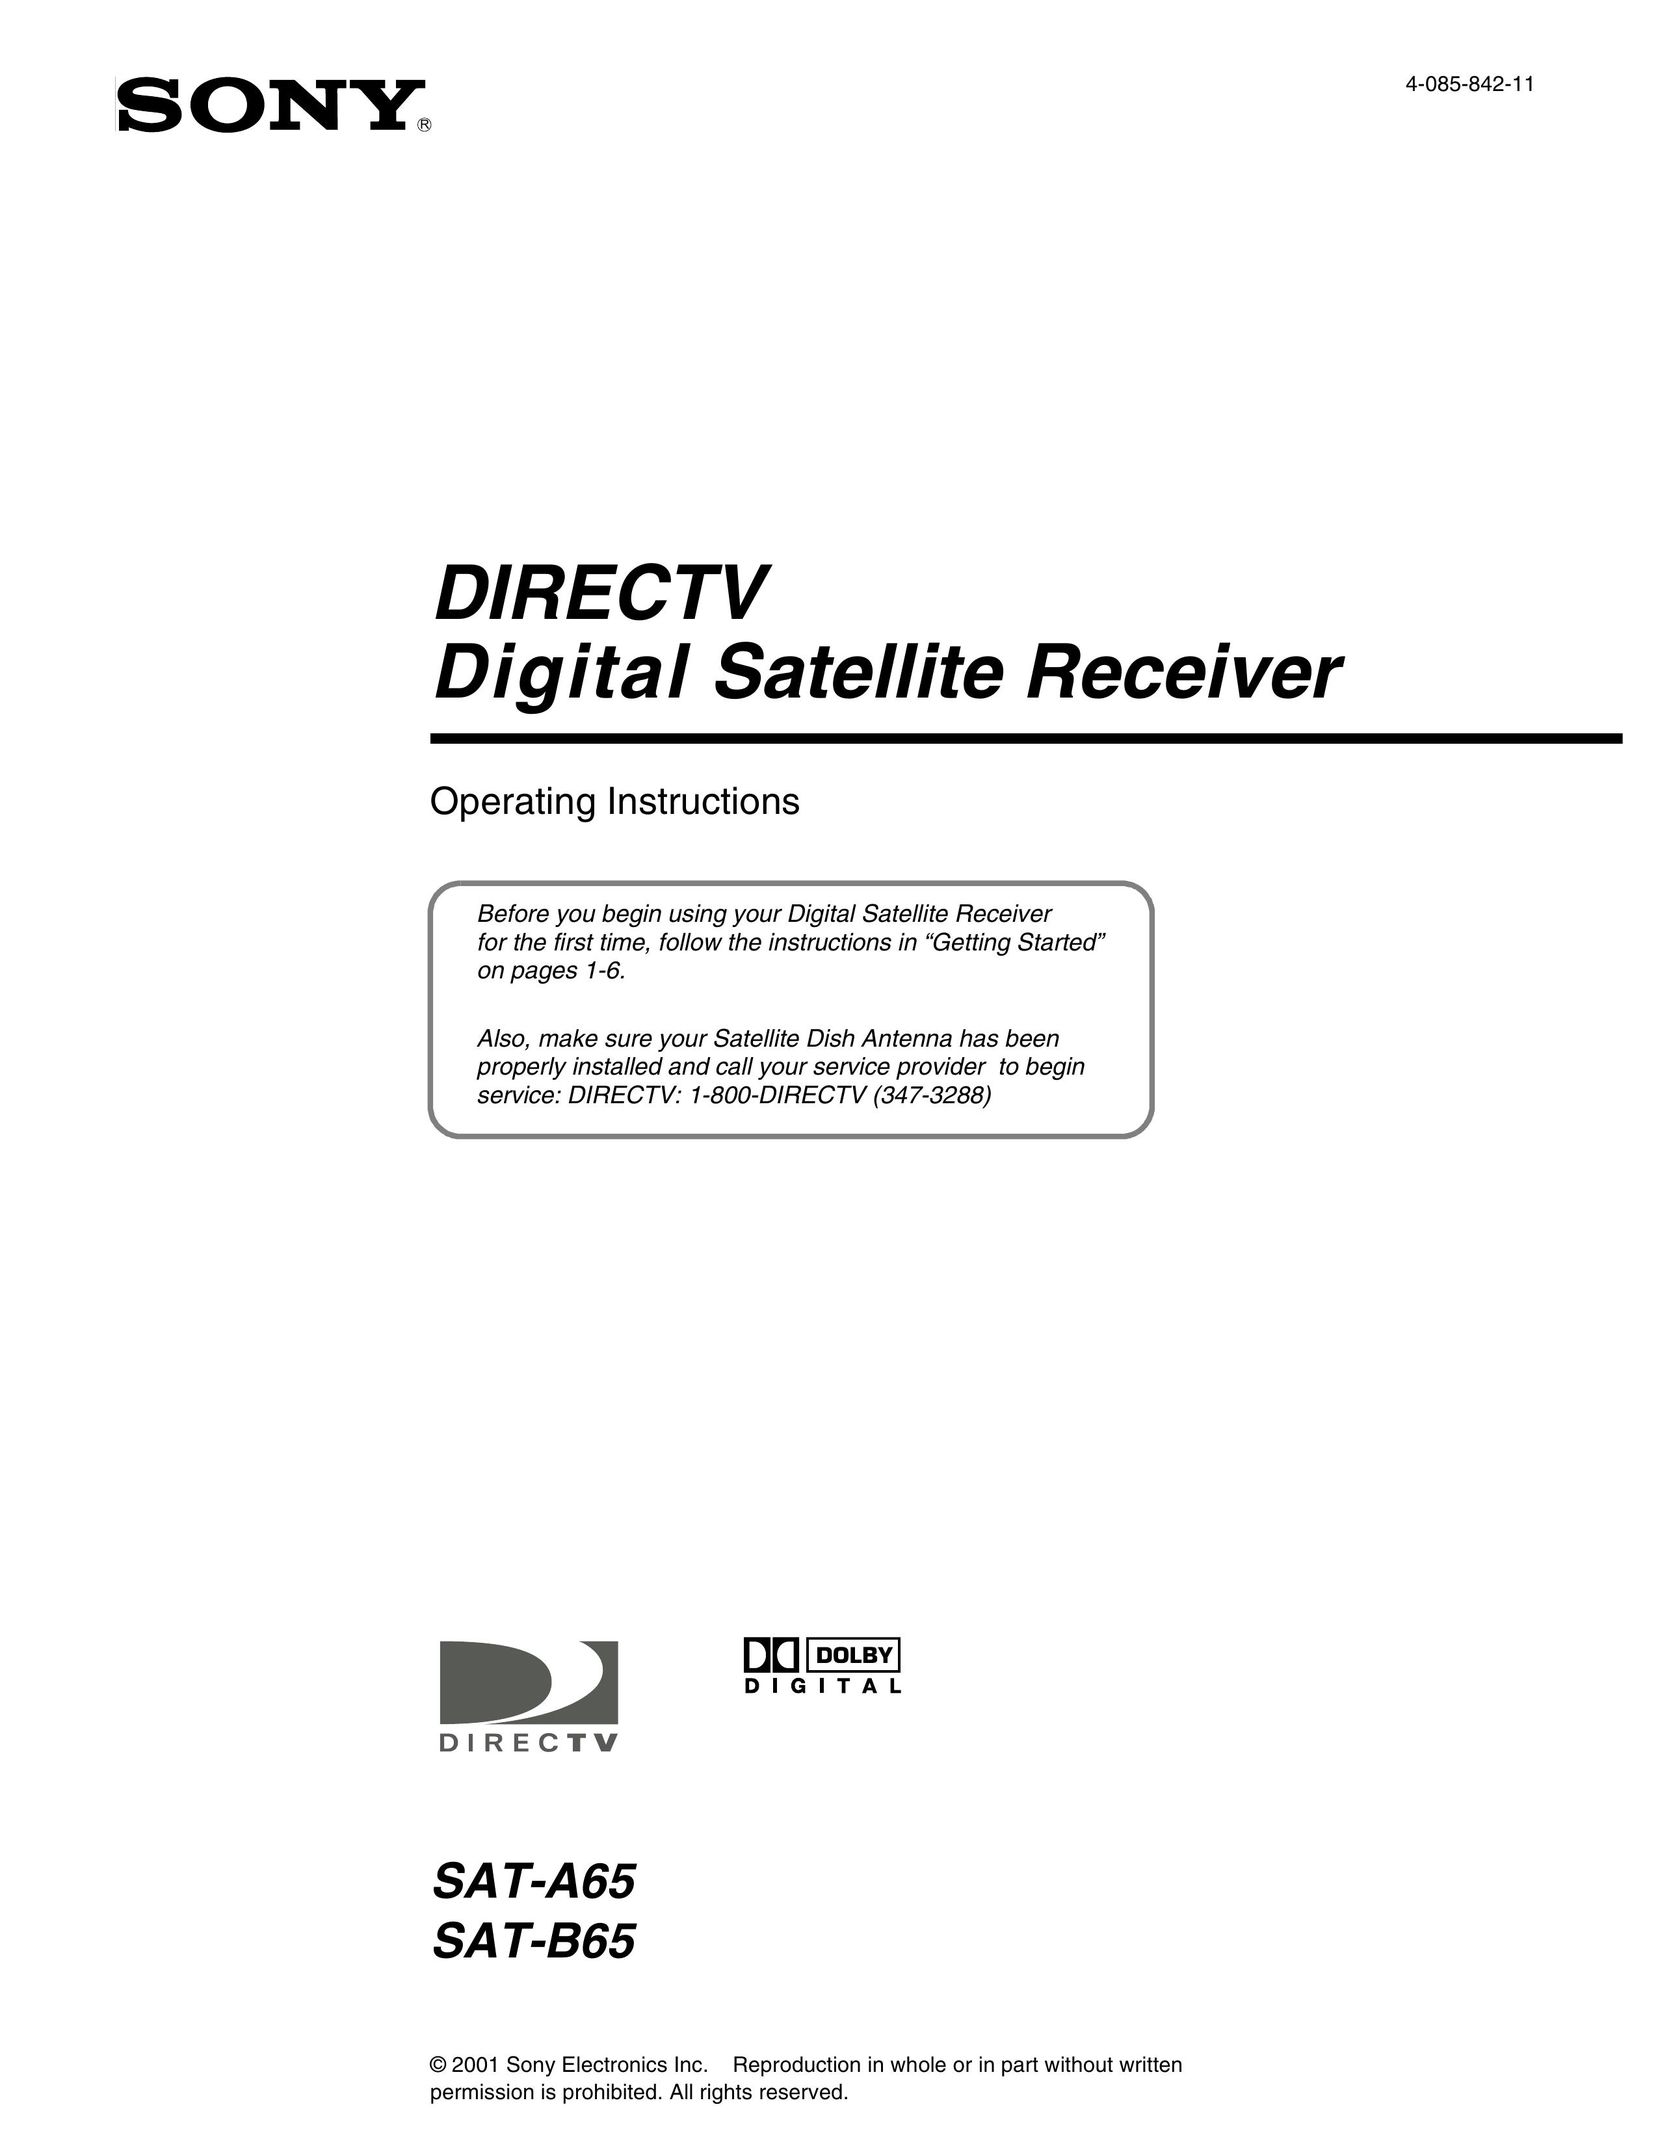 Sony SAT-B65 Satellite TV System User Manual